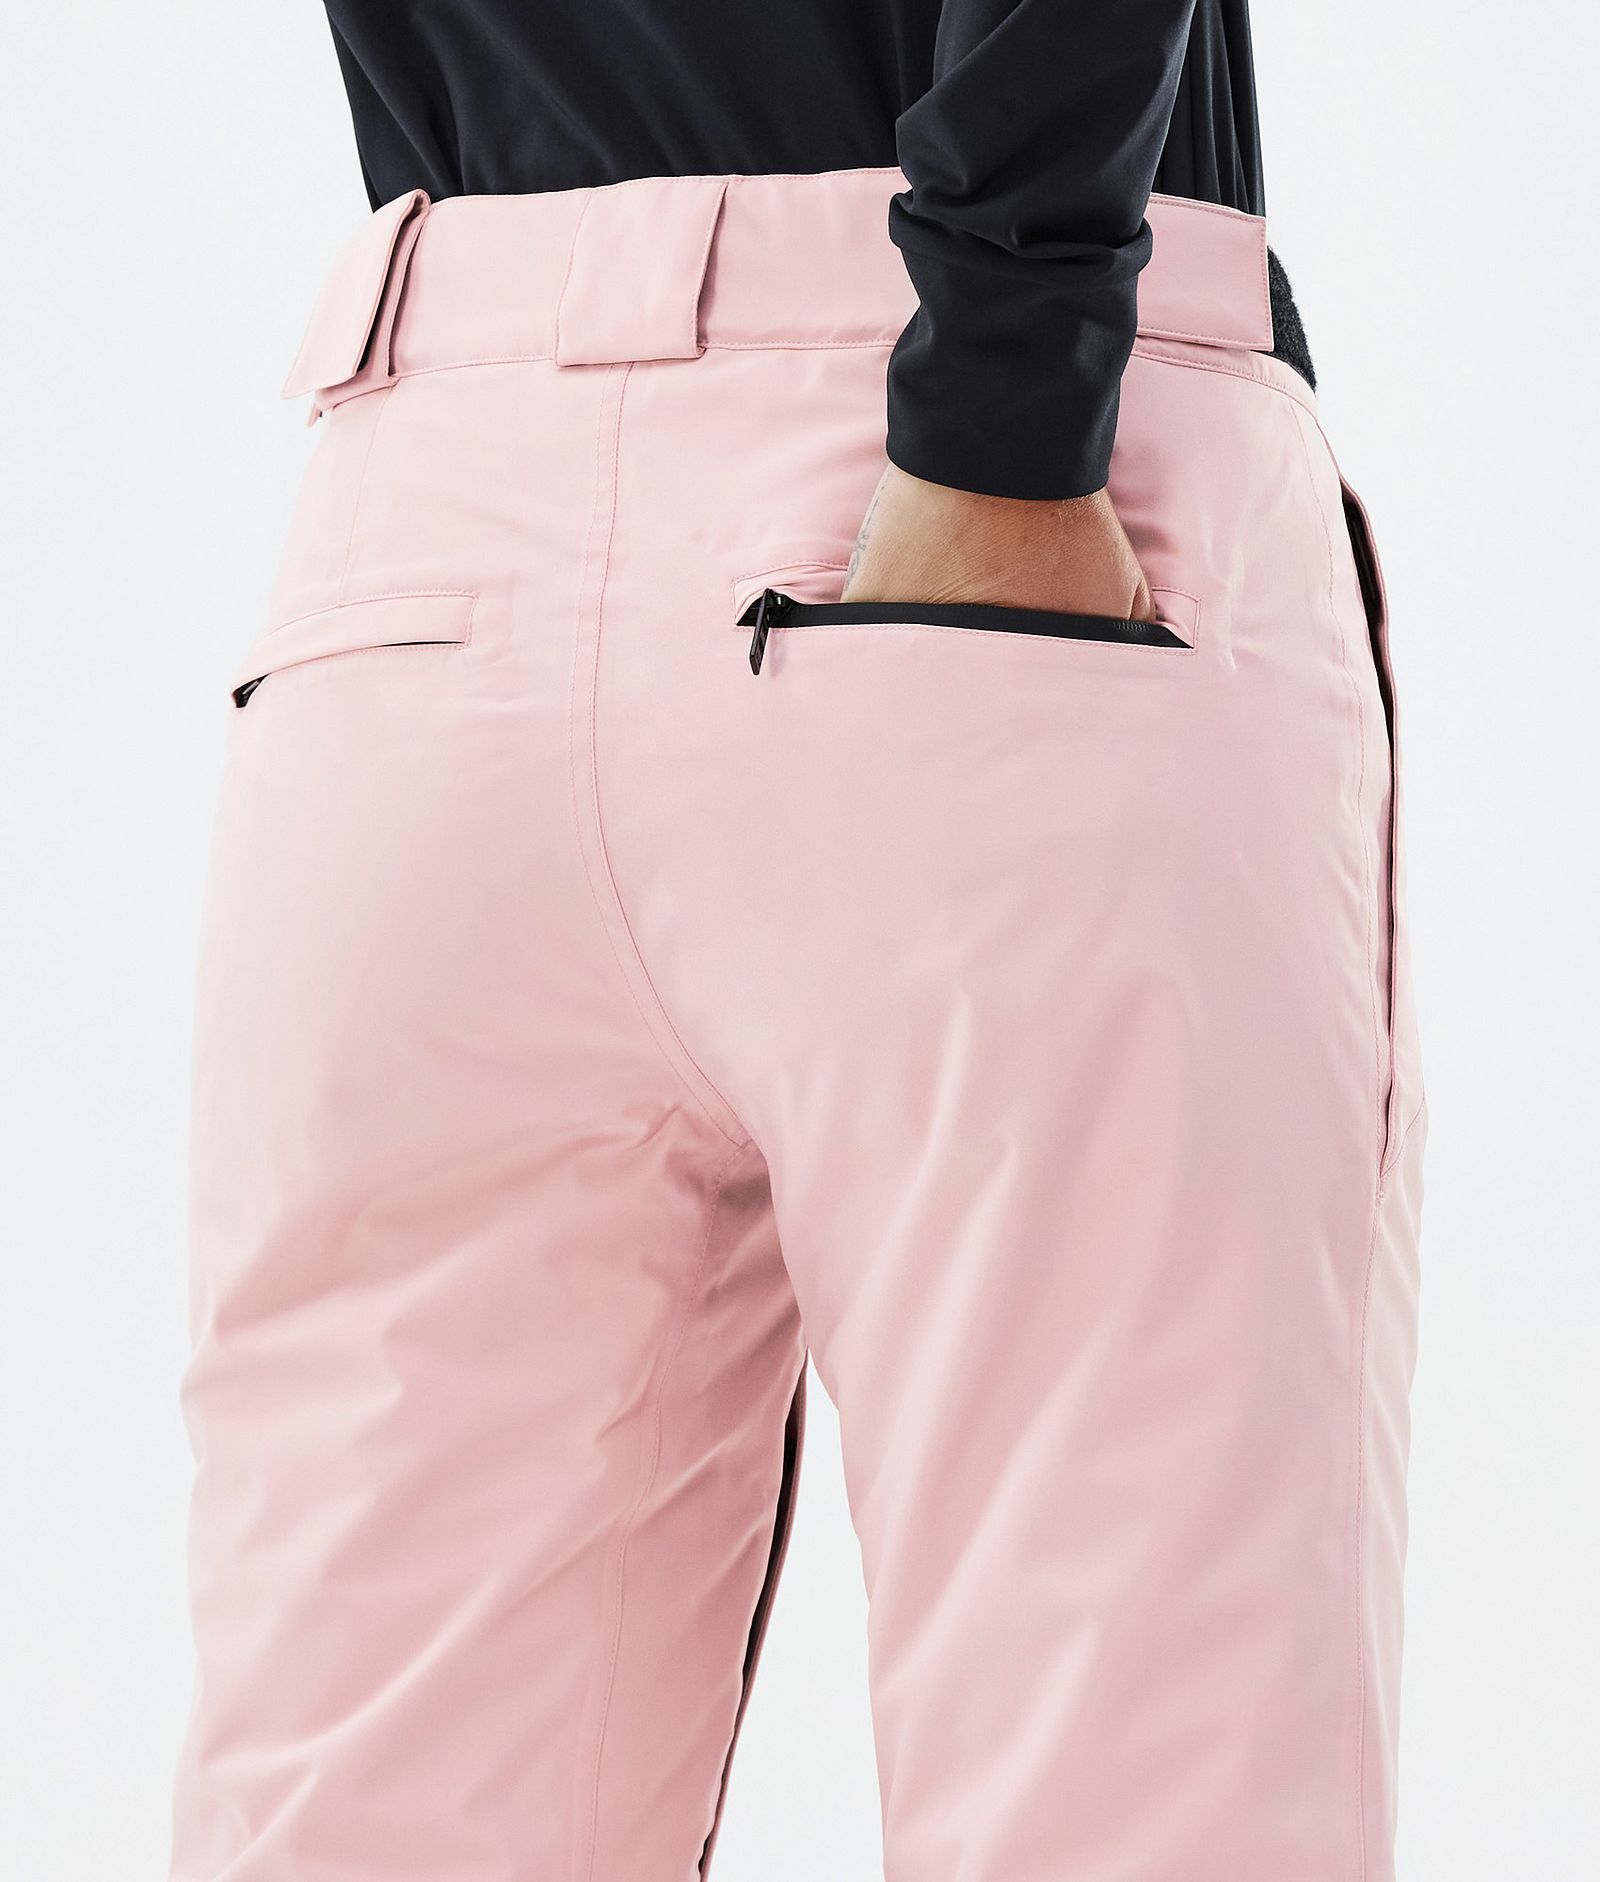 Con W Pantalones Snowboard Mujer Soft Pink Renewed, Imagen 6 de 6